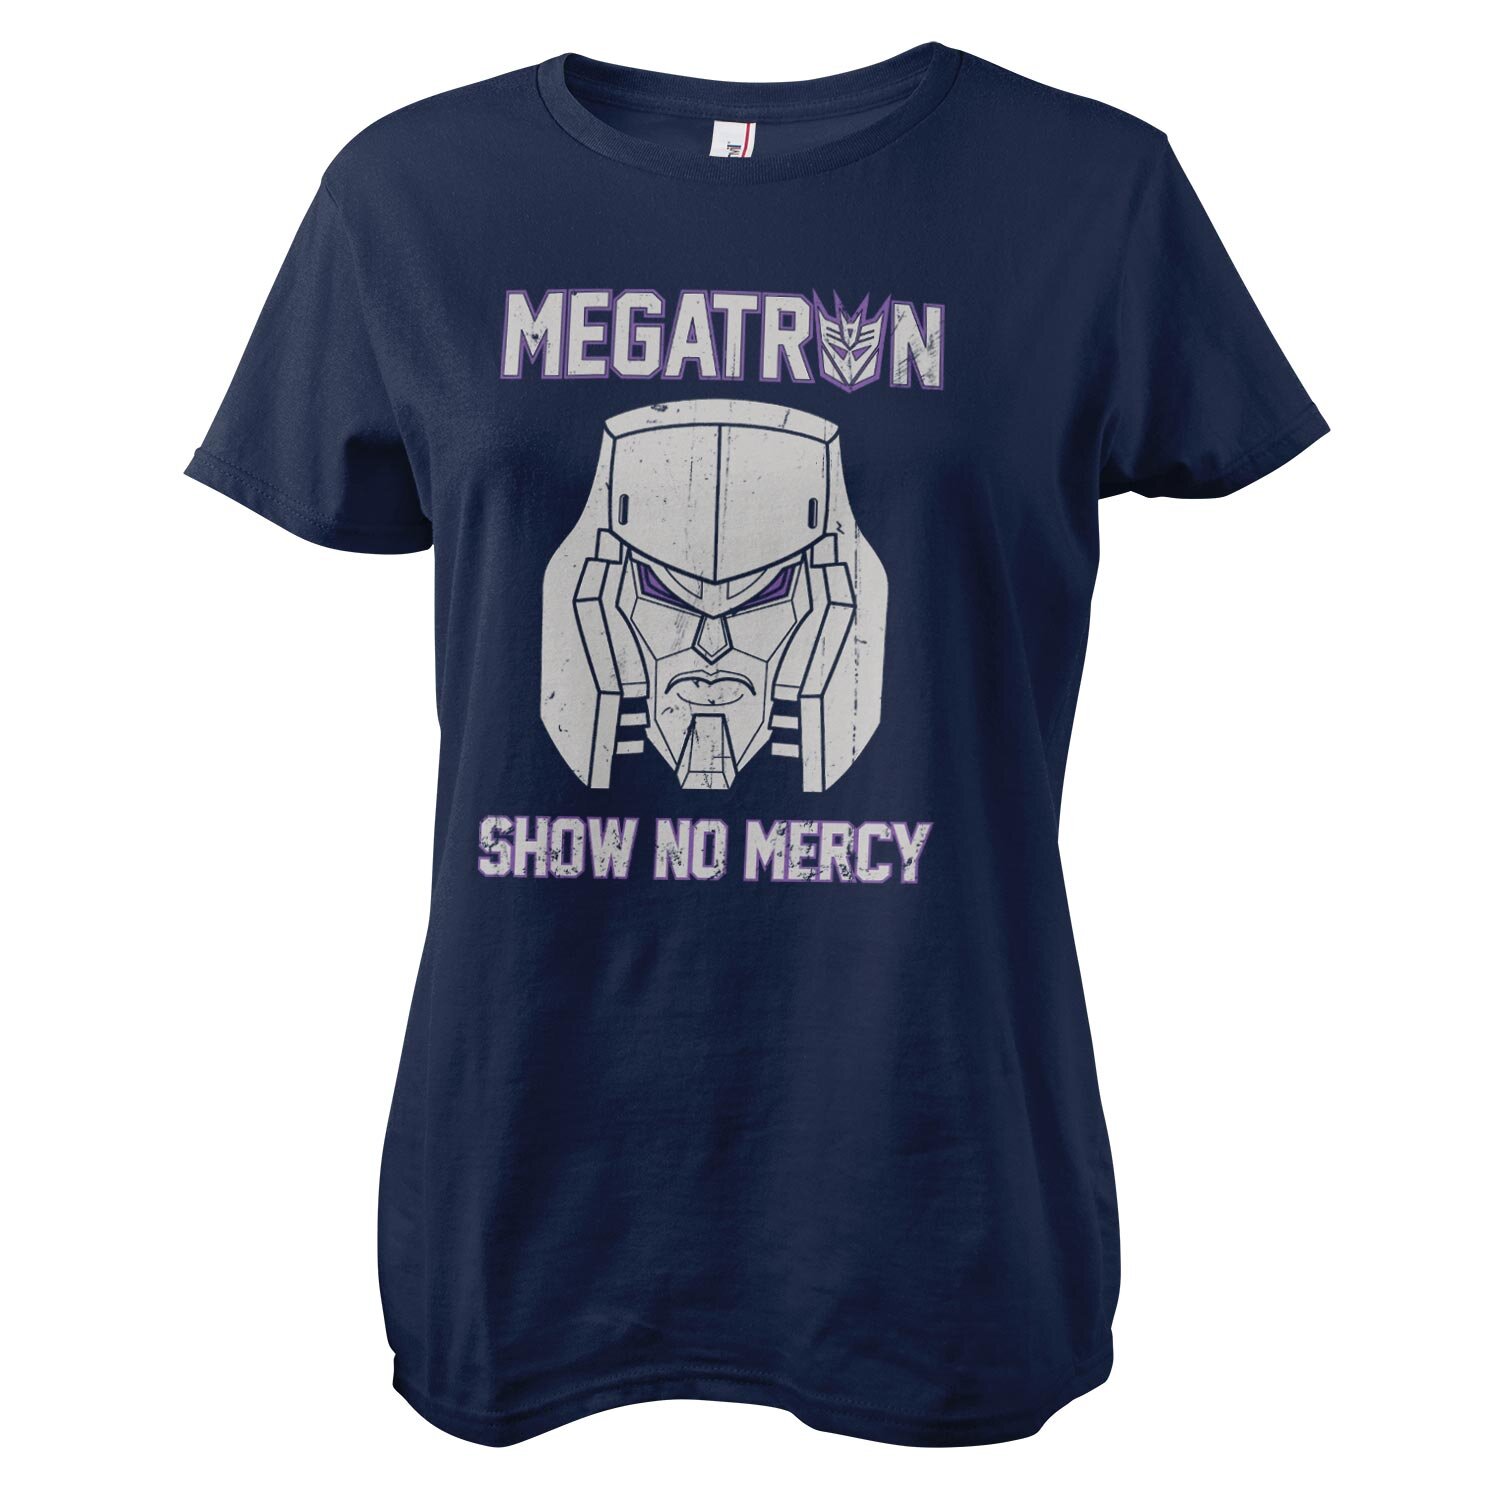 Megatron - Show No Mercy Girly Tee